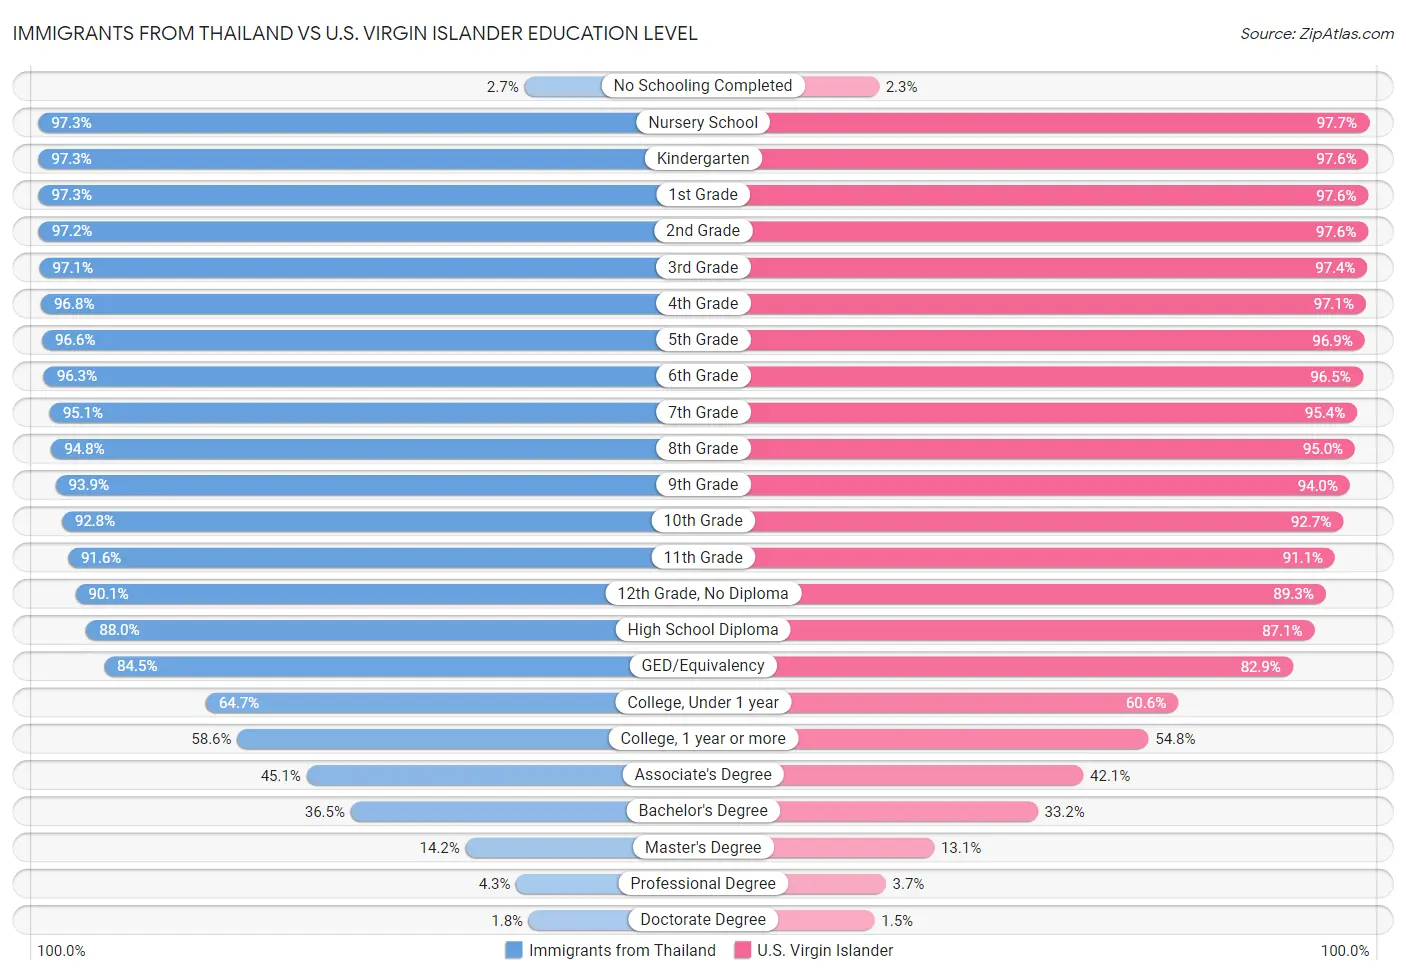 Immigrants from Thailand vs U.S. Virgin Islander Education Level